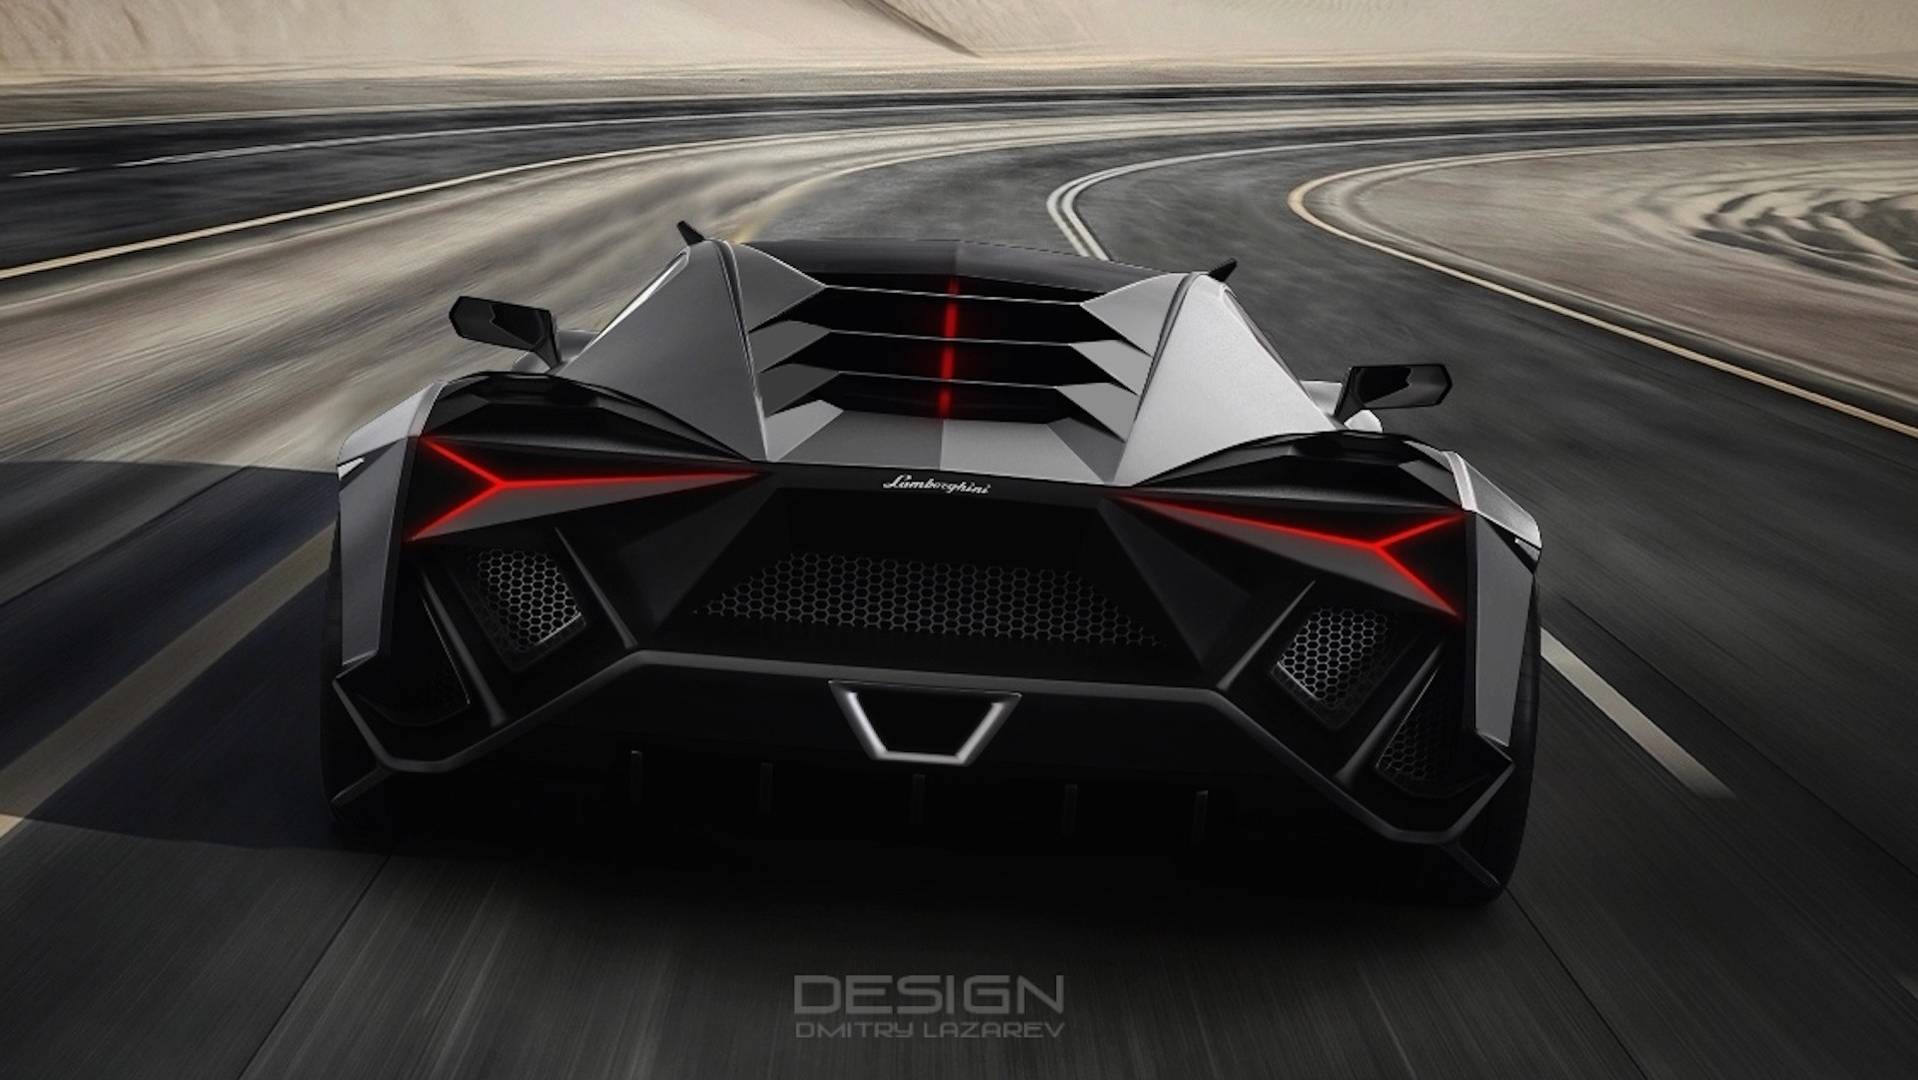 Lamborghini Forsennato Hypercar Concept. Motor1.com Photo